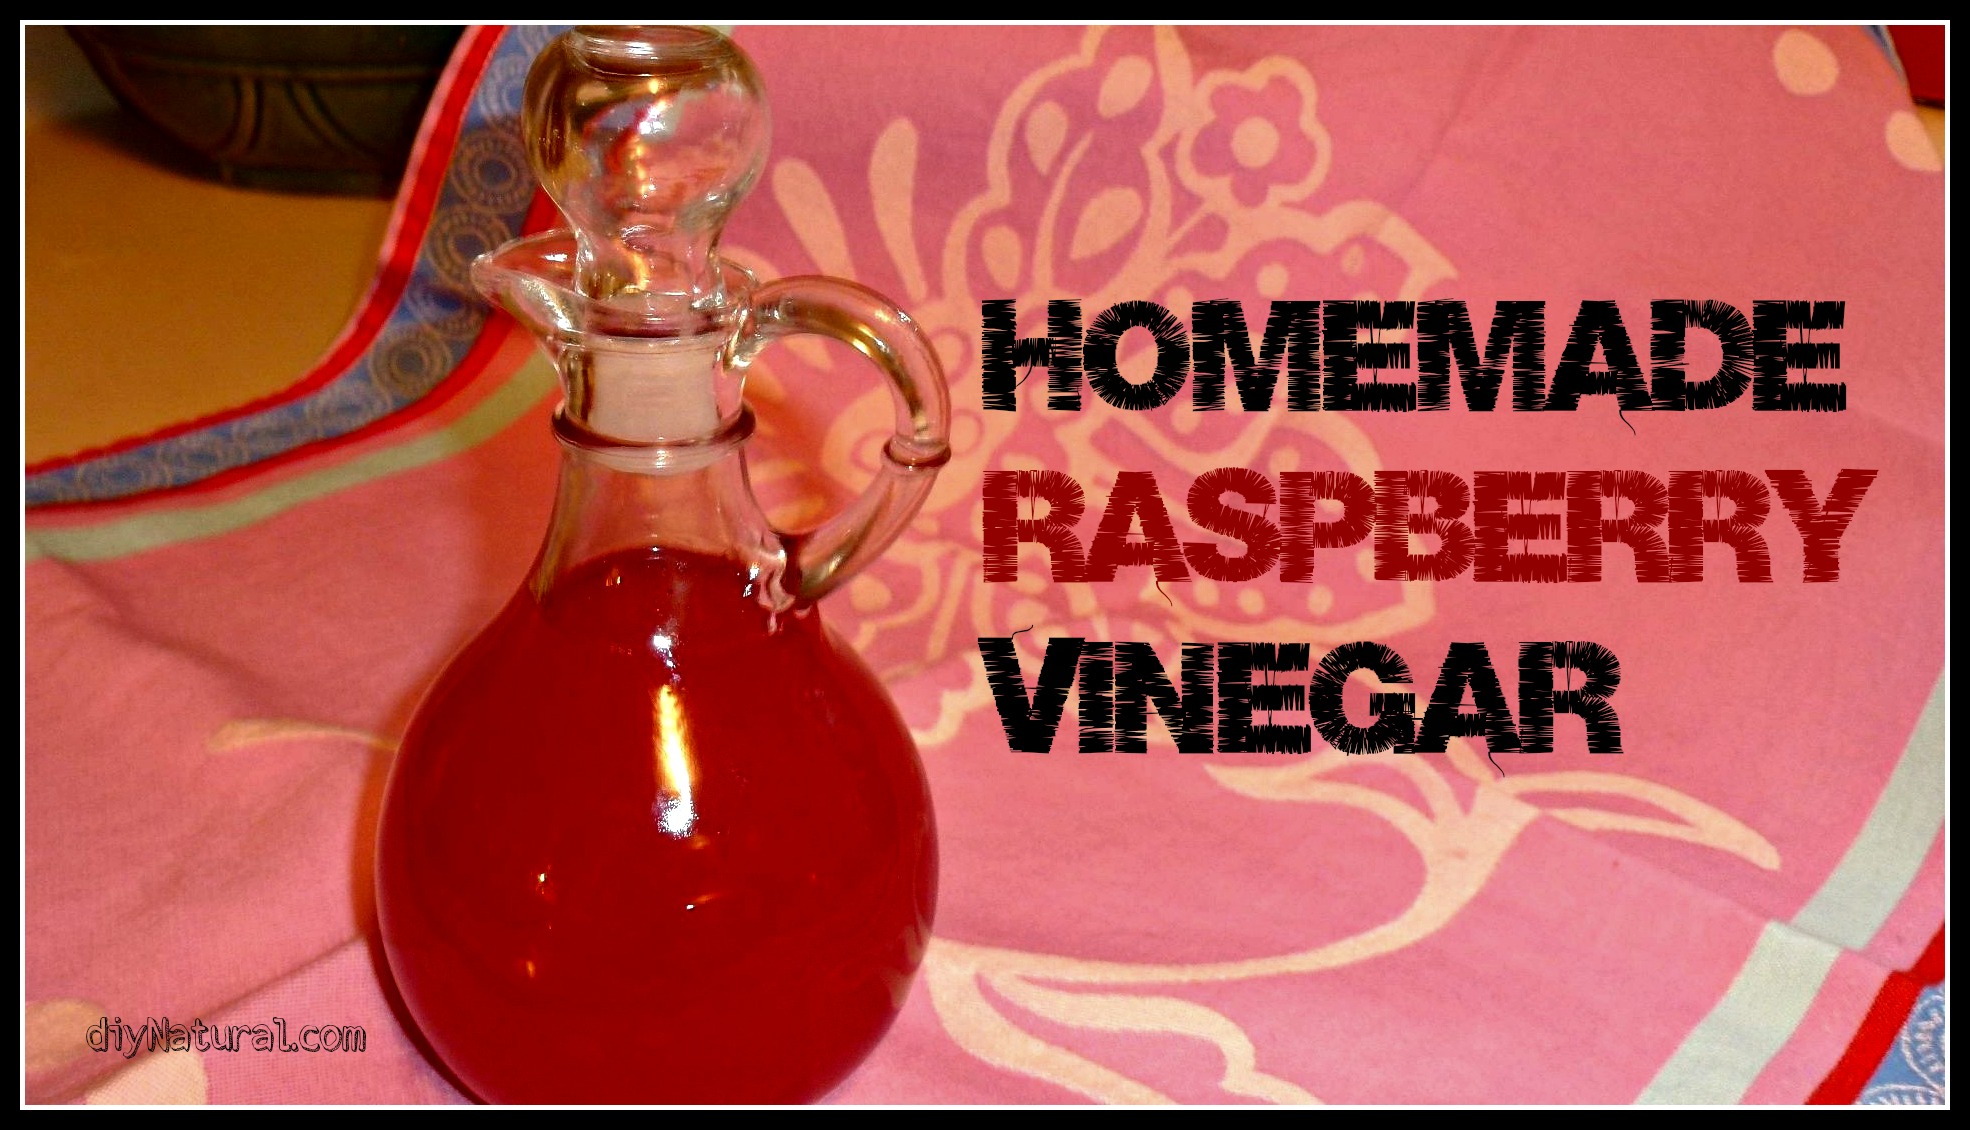 Raspberry Vinegar Recipe